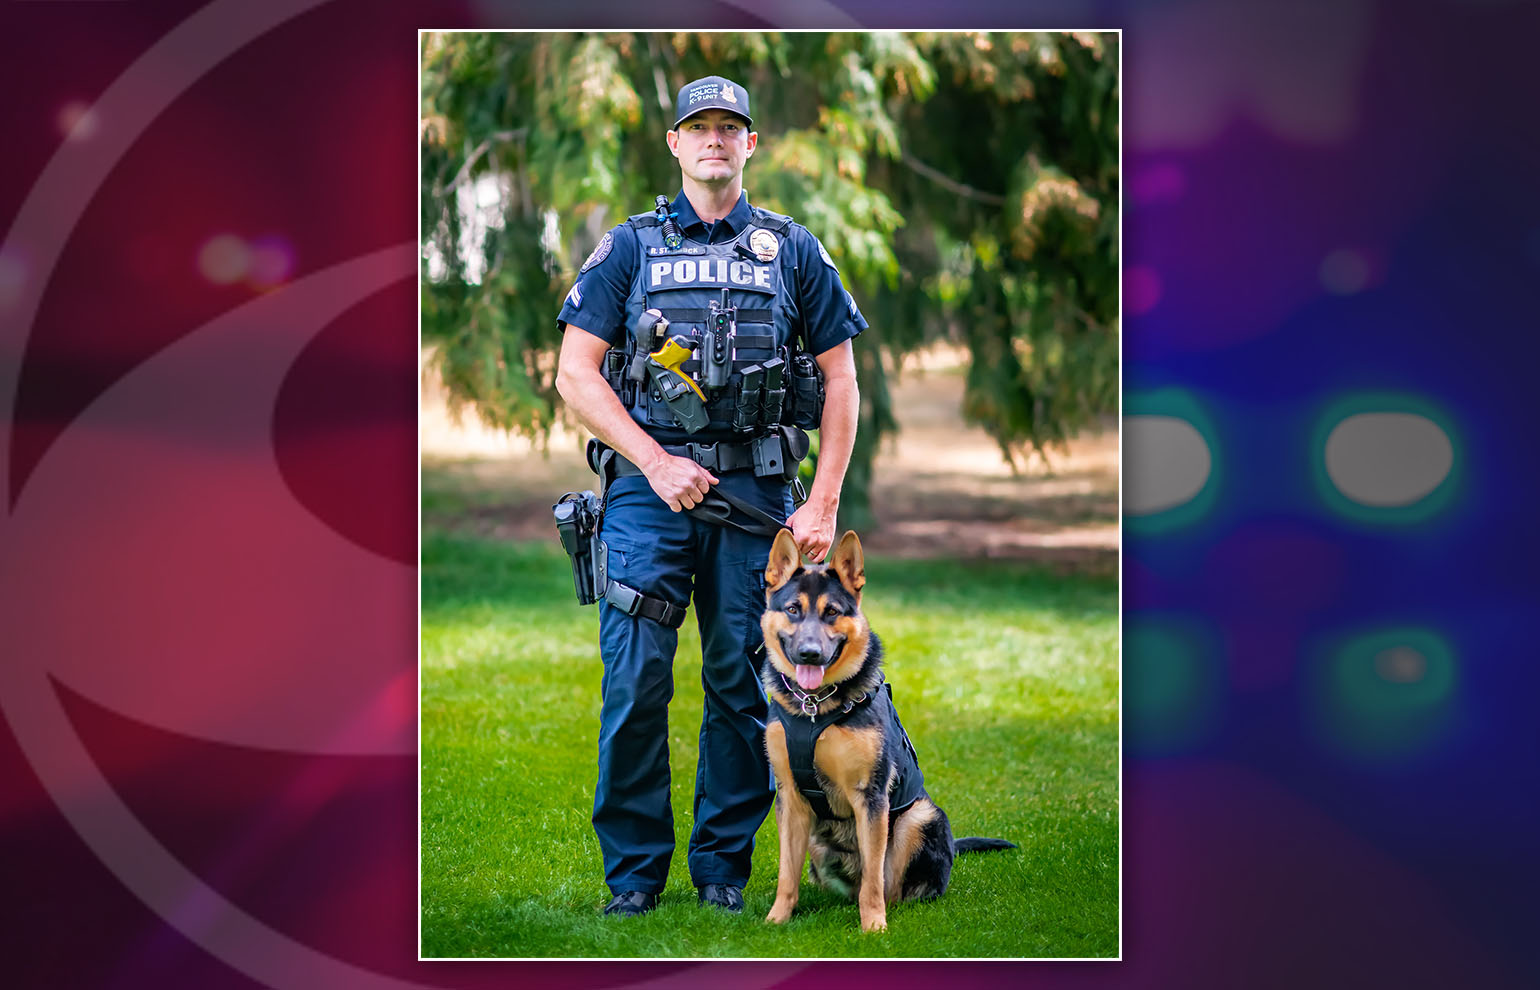 Vancouver police Cpl. Ryan Starbuck and K-9 partner Tex.